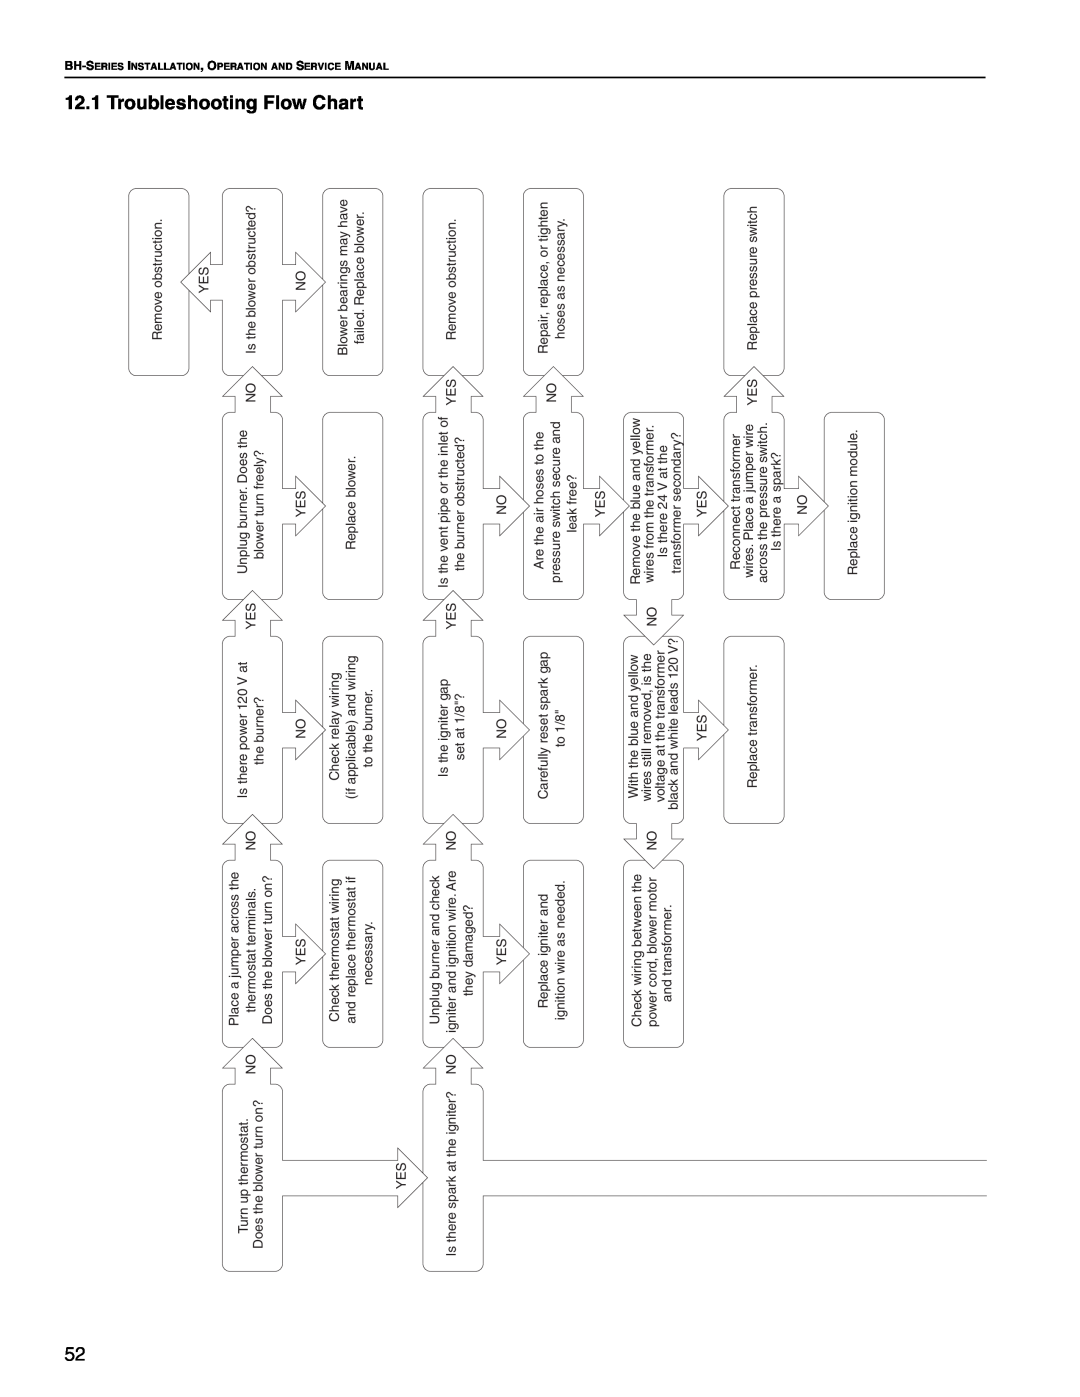 Roberts Gorden Linear Heater manual 12.1, Troubleshooting Flow Chart 